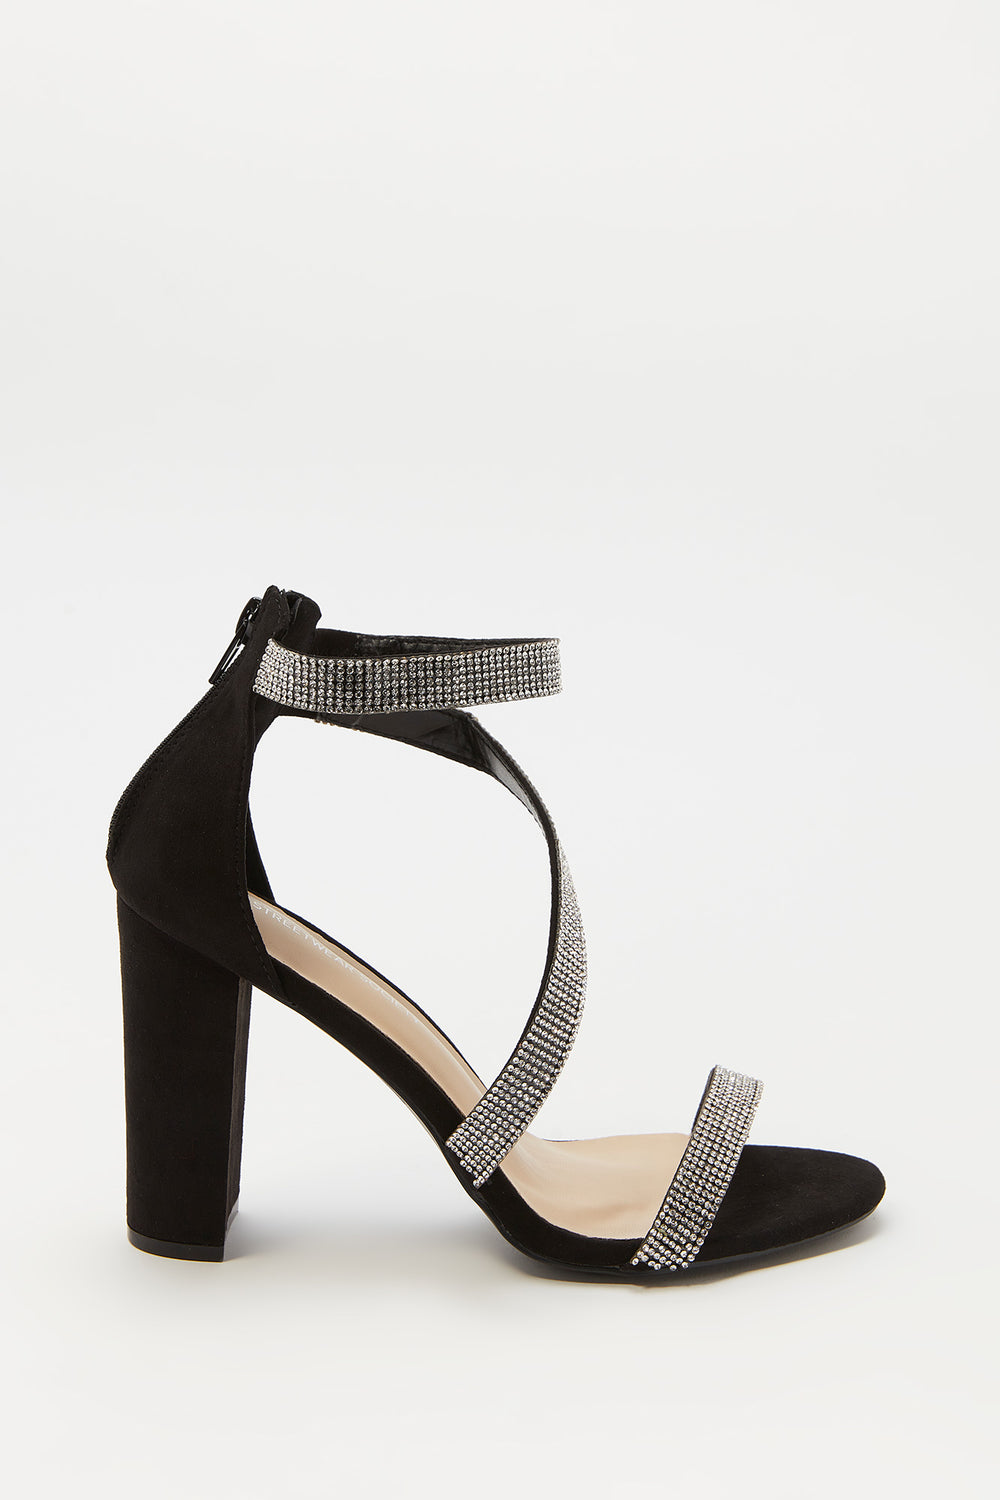 black rhinestone strappy heels